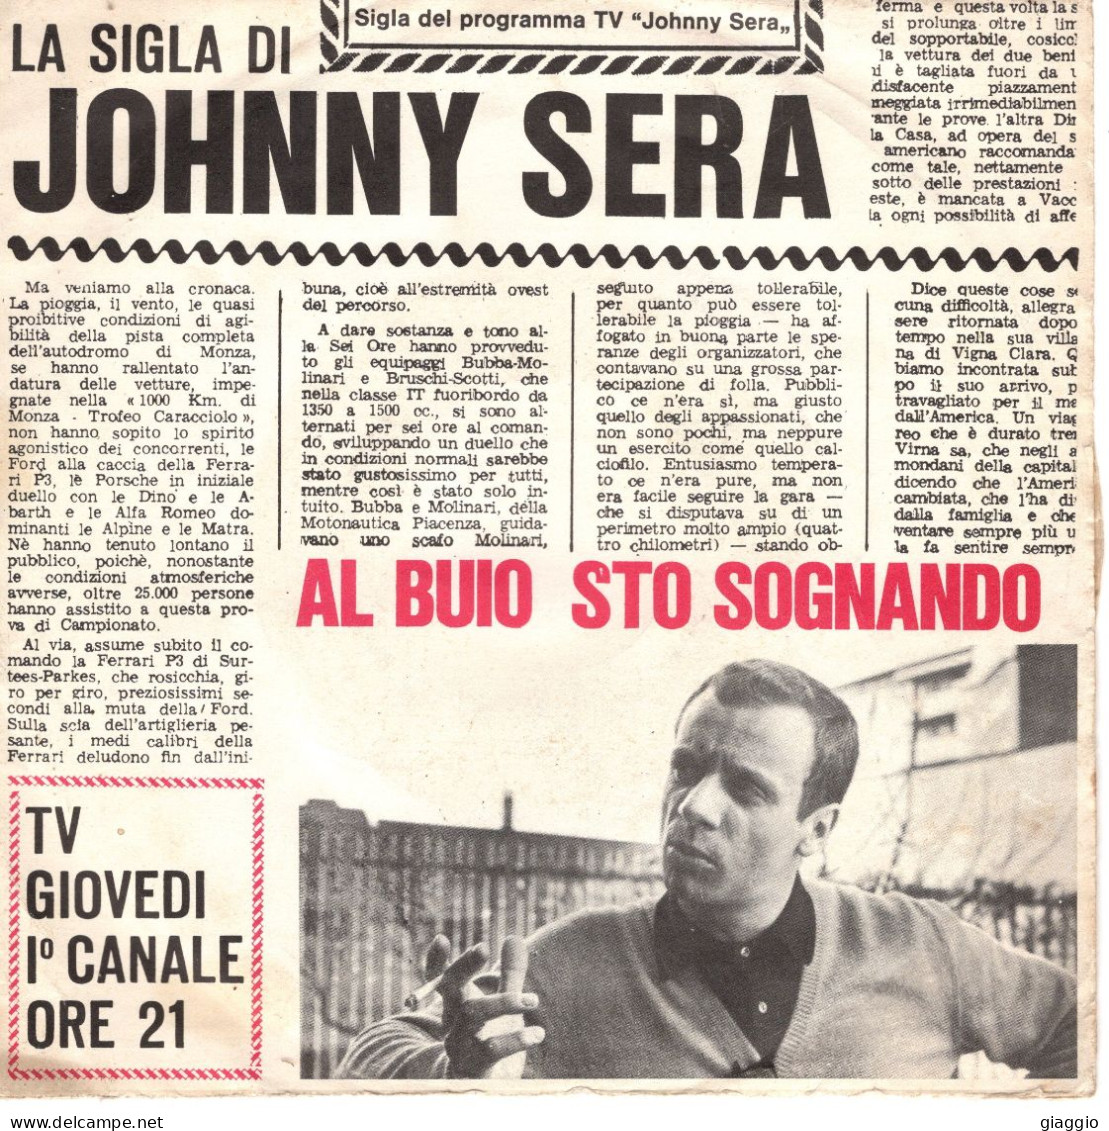 °°° 511) 45 GIRI - JOHNNY DORELLI - AL BUIO STO SOGNANDO / A FOGGY DAY °°° - Other - Italian Music